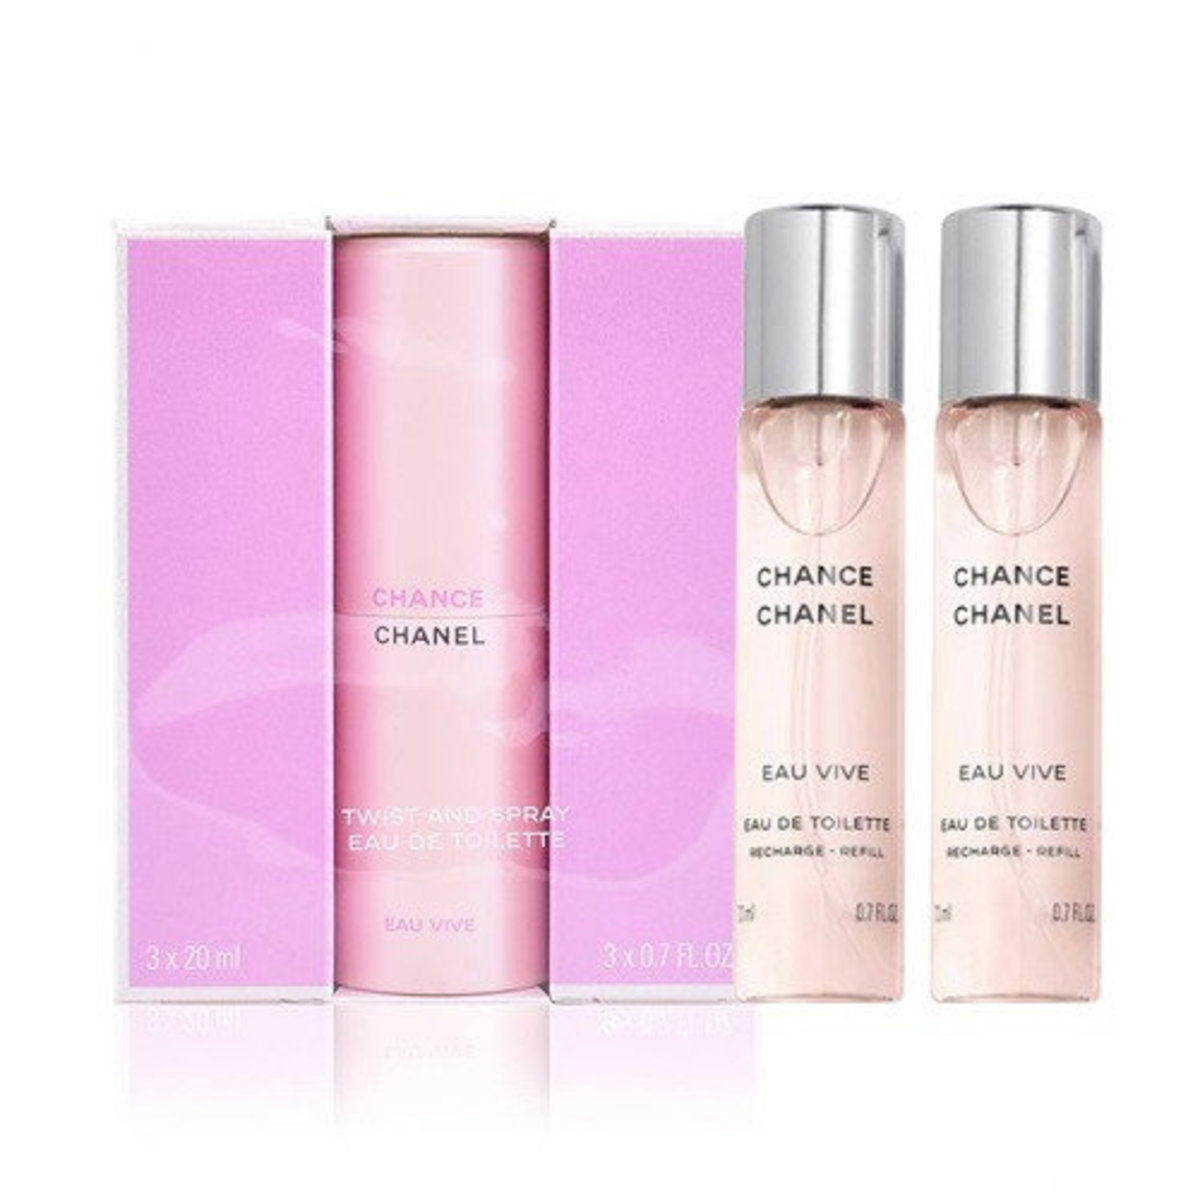 Chanel Chance Eau Vive EDT 3 x 20mL Travel Spray